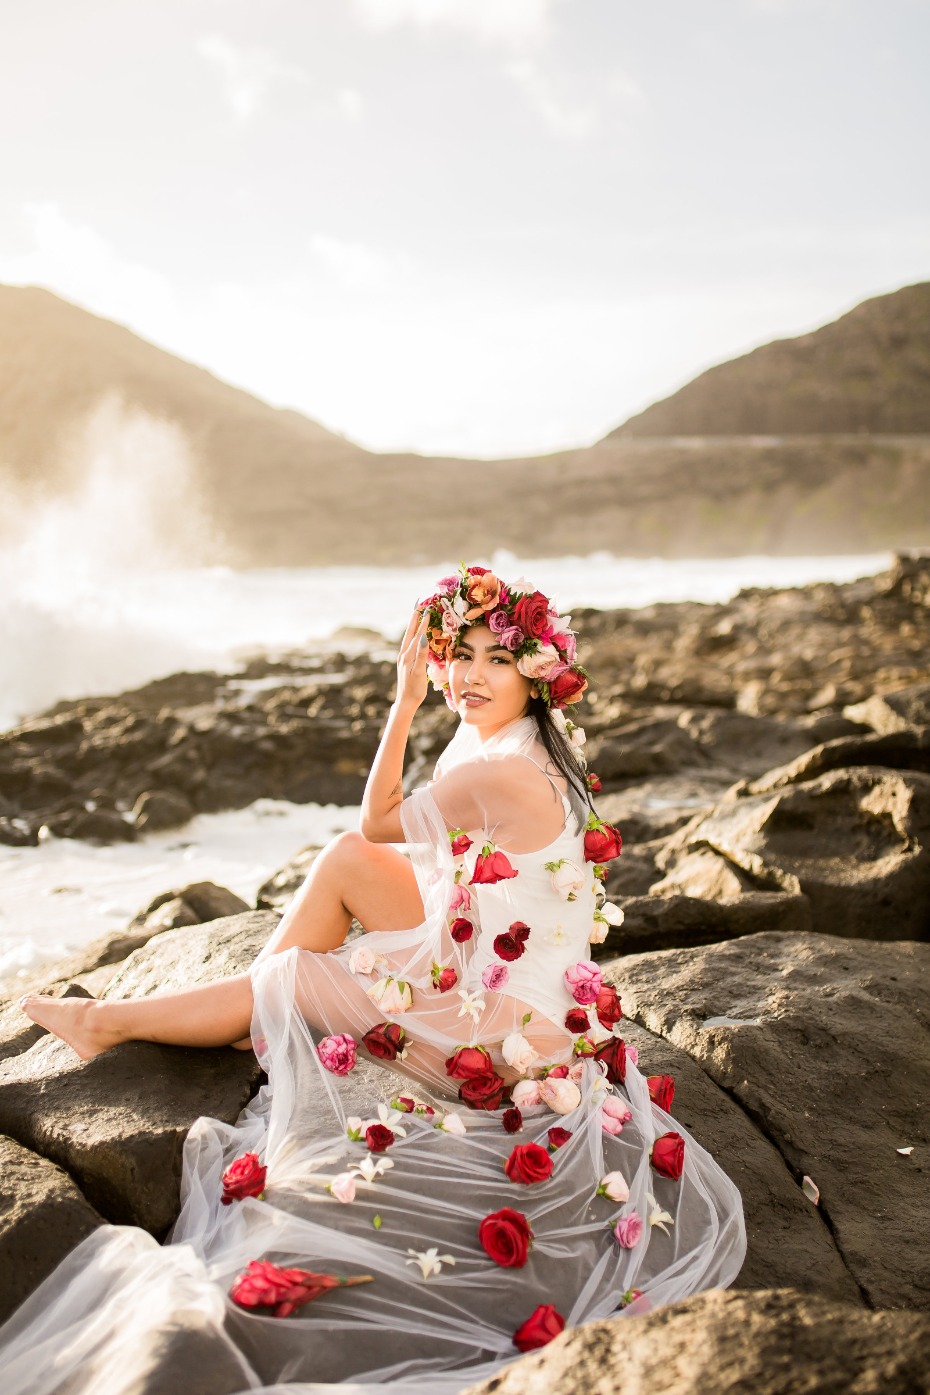 Dreamy bridal portrait session in Hawaii